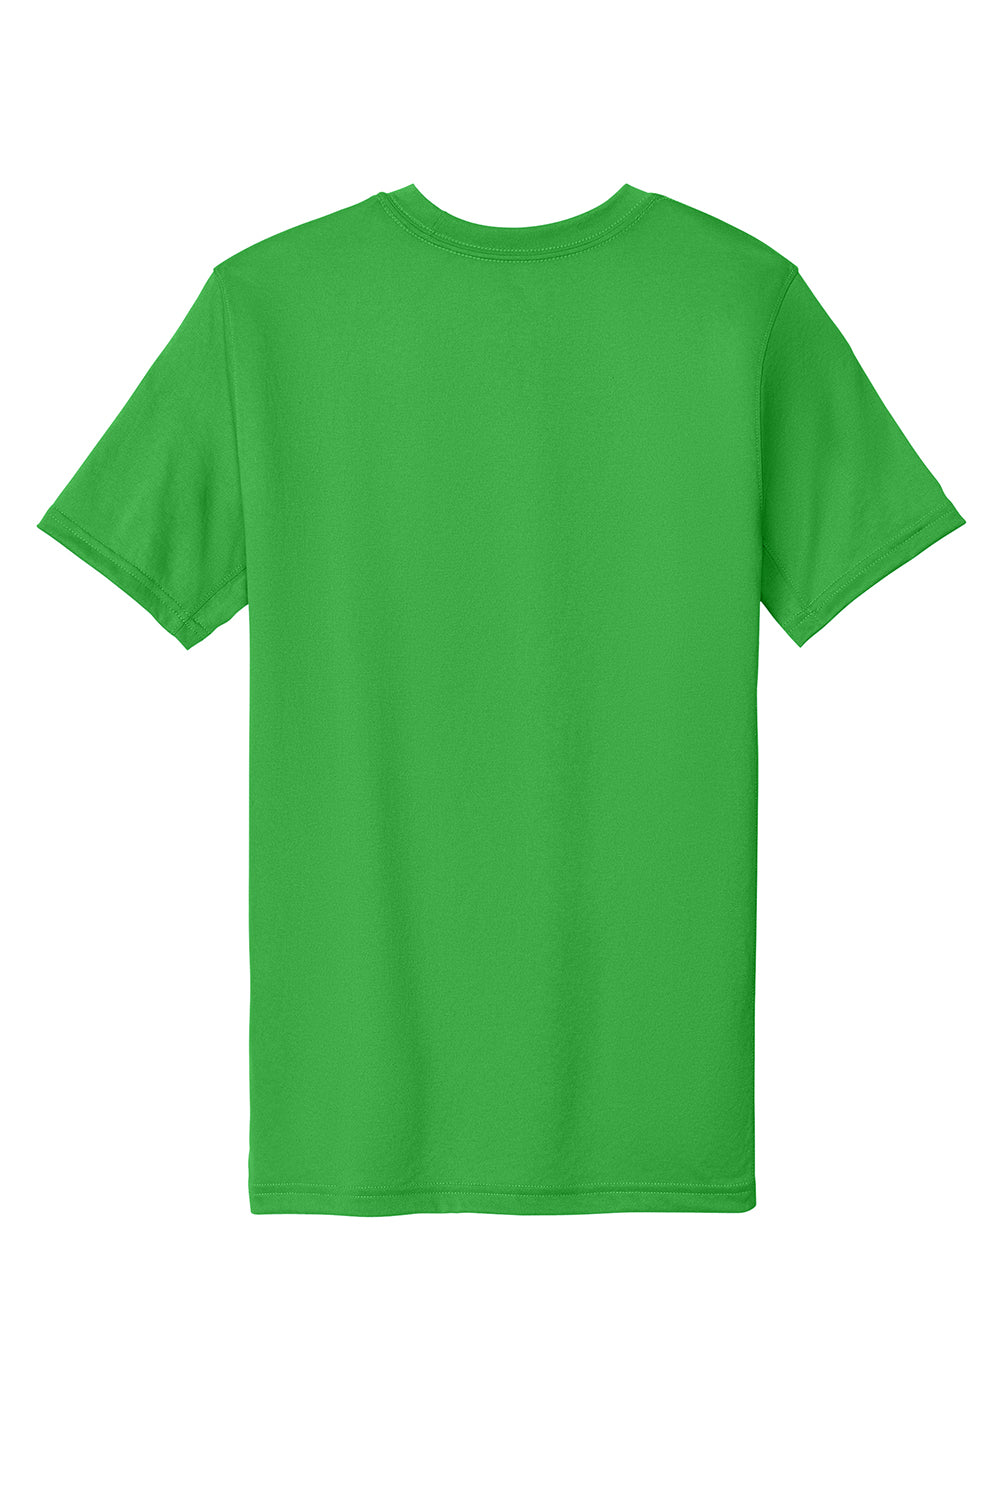 Nike NKDX8730 Mens rLegend Dri-Fit Moisture Wicking Short Sleeve Crewneck T-Shirt Apple Green Flat Back